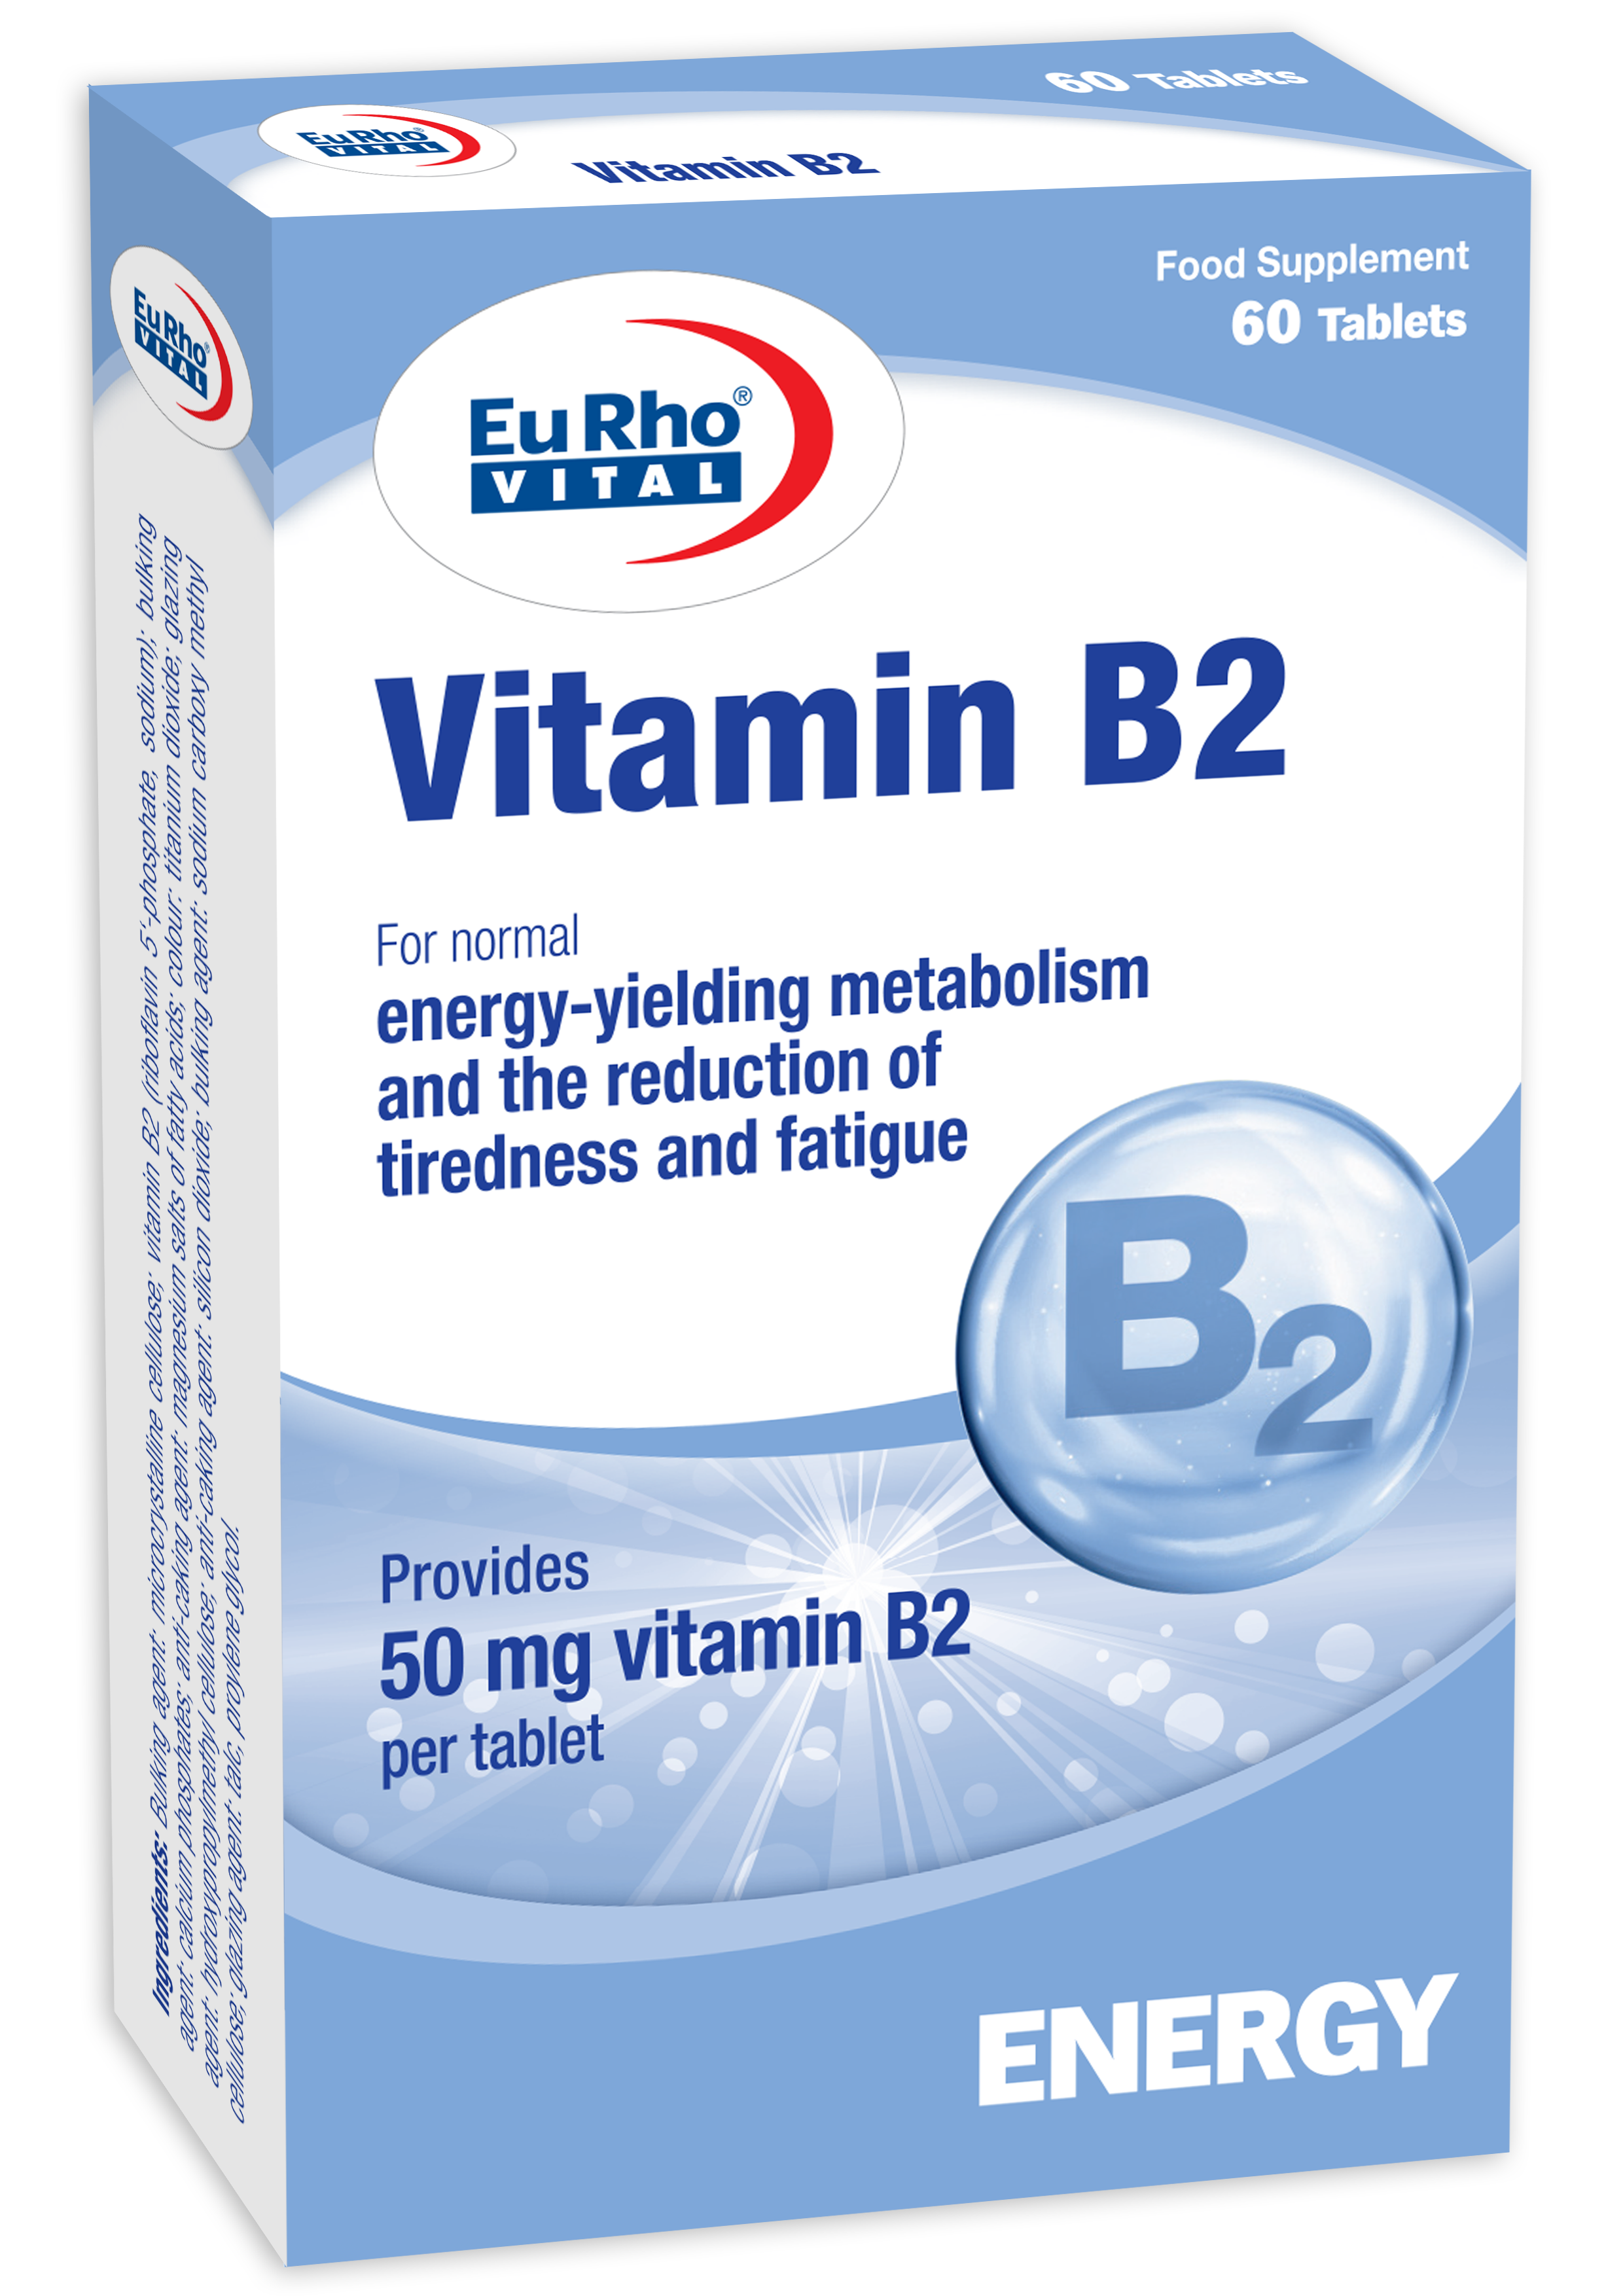 https://hakimanteb.com/wp-content/uploads/2022/05/Vitamin-B2-Eurovital-shadow.png